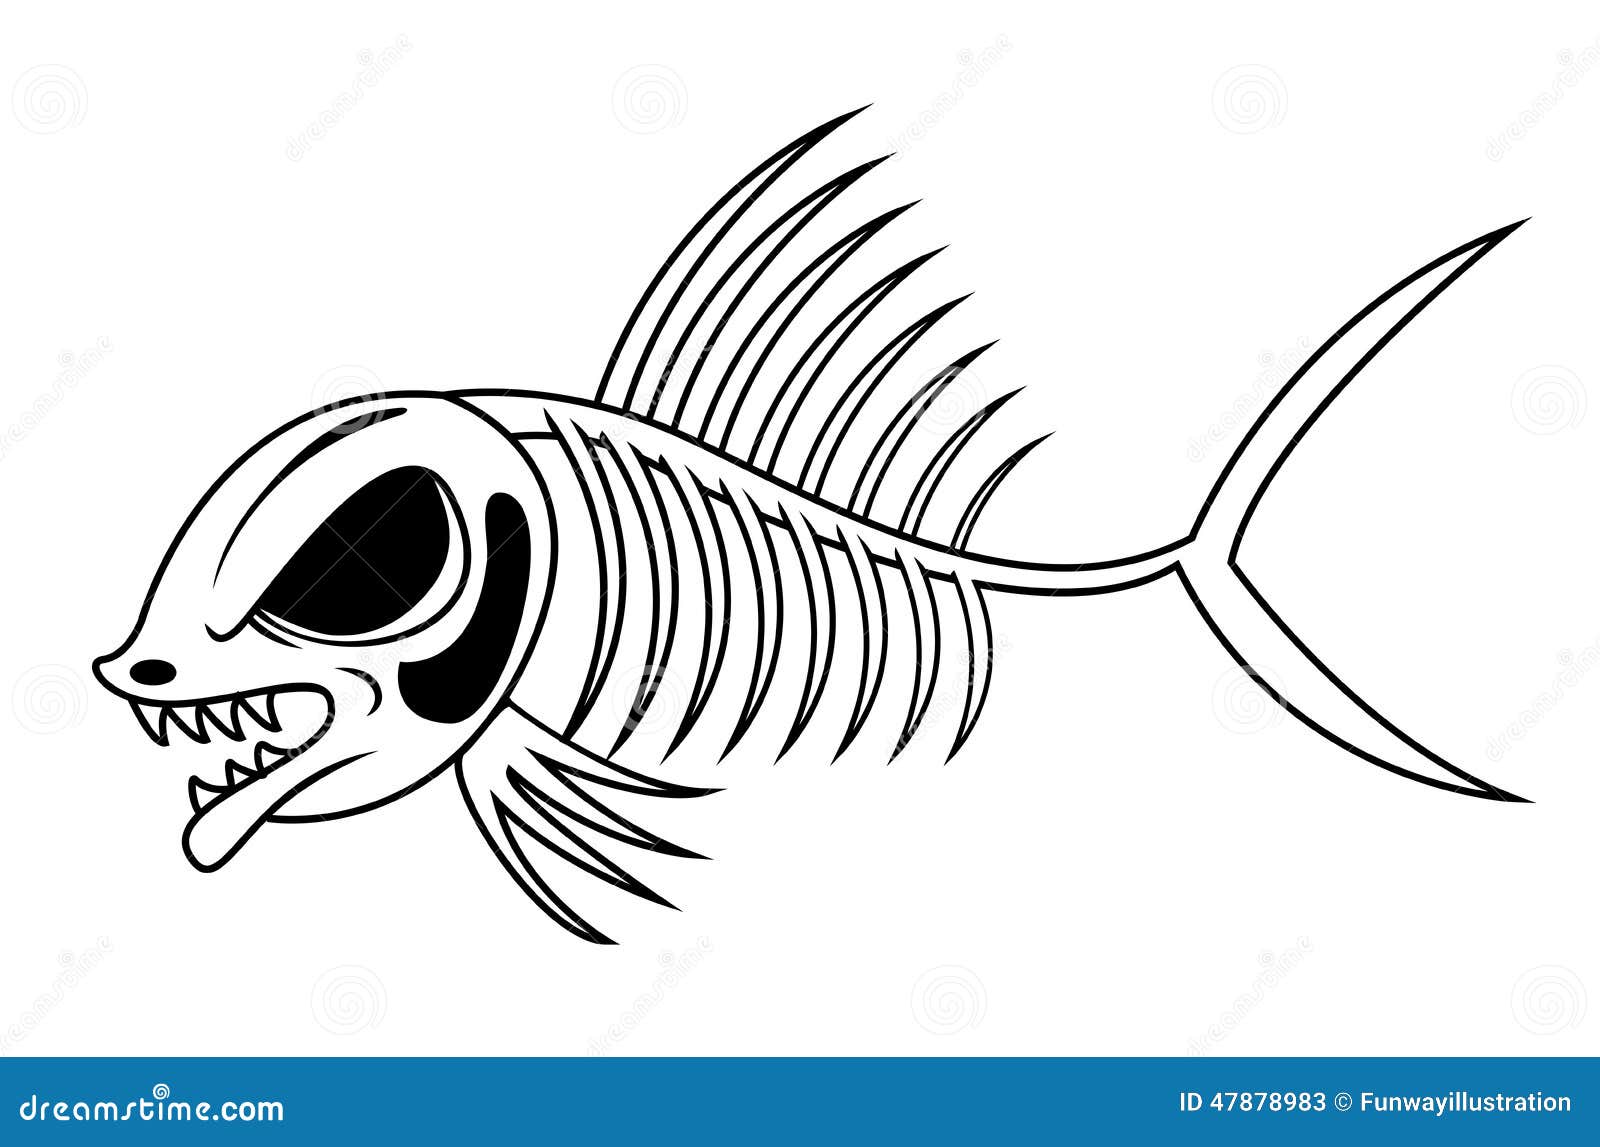 Download Fish Skeleton Stock Vector - Image: 47878983